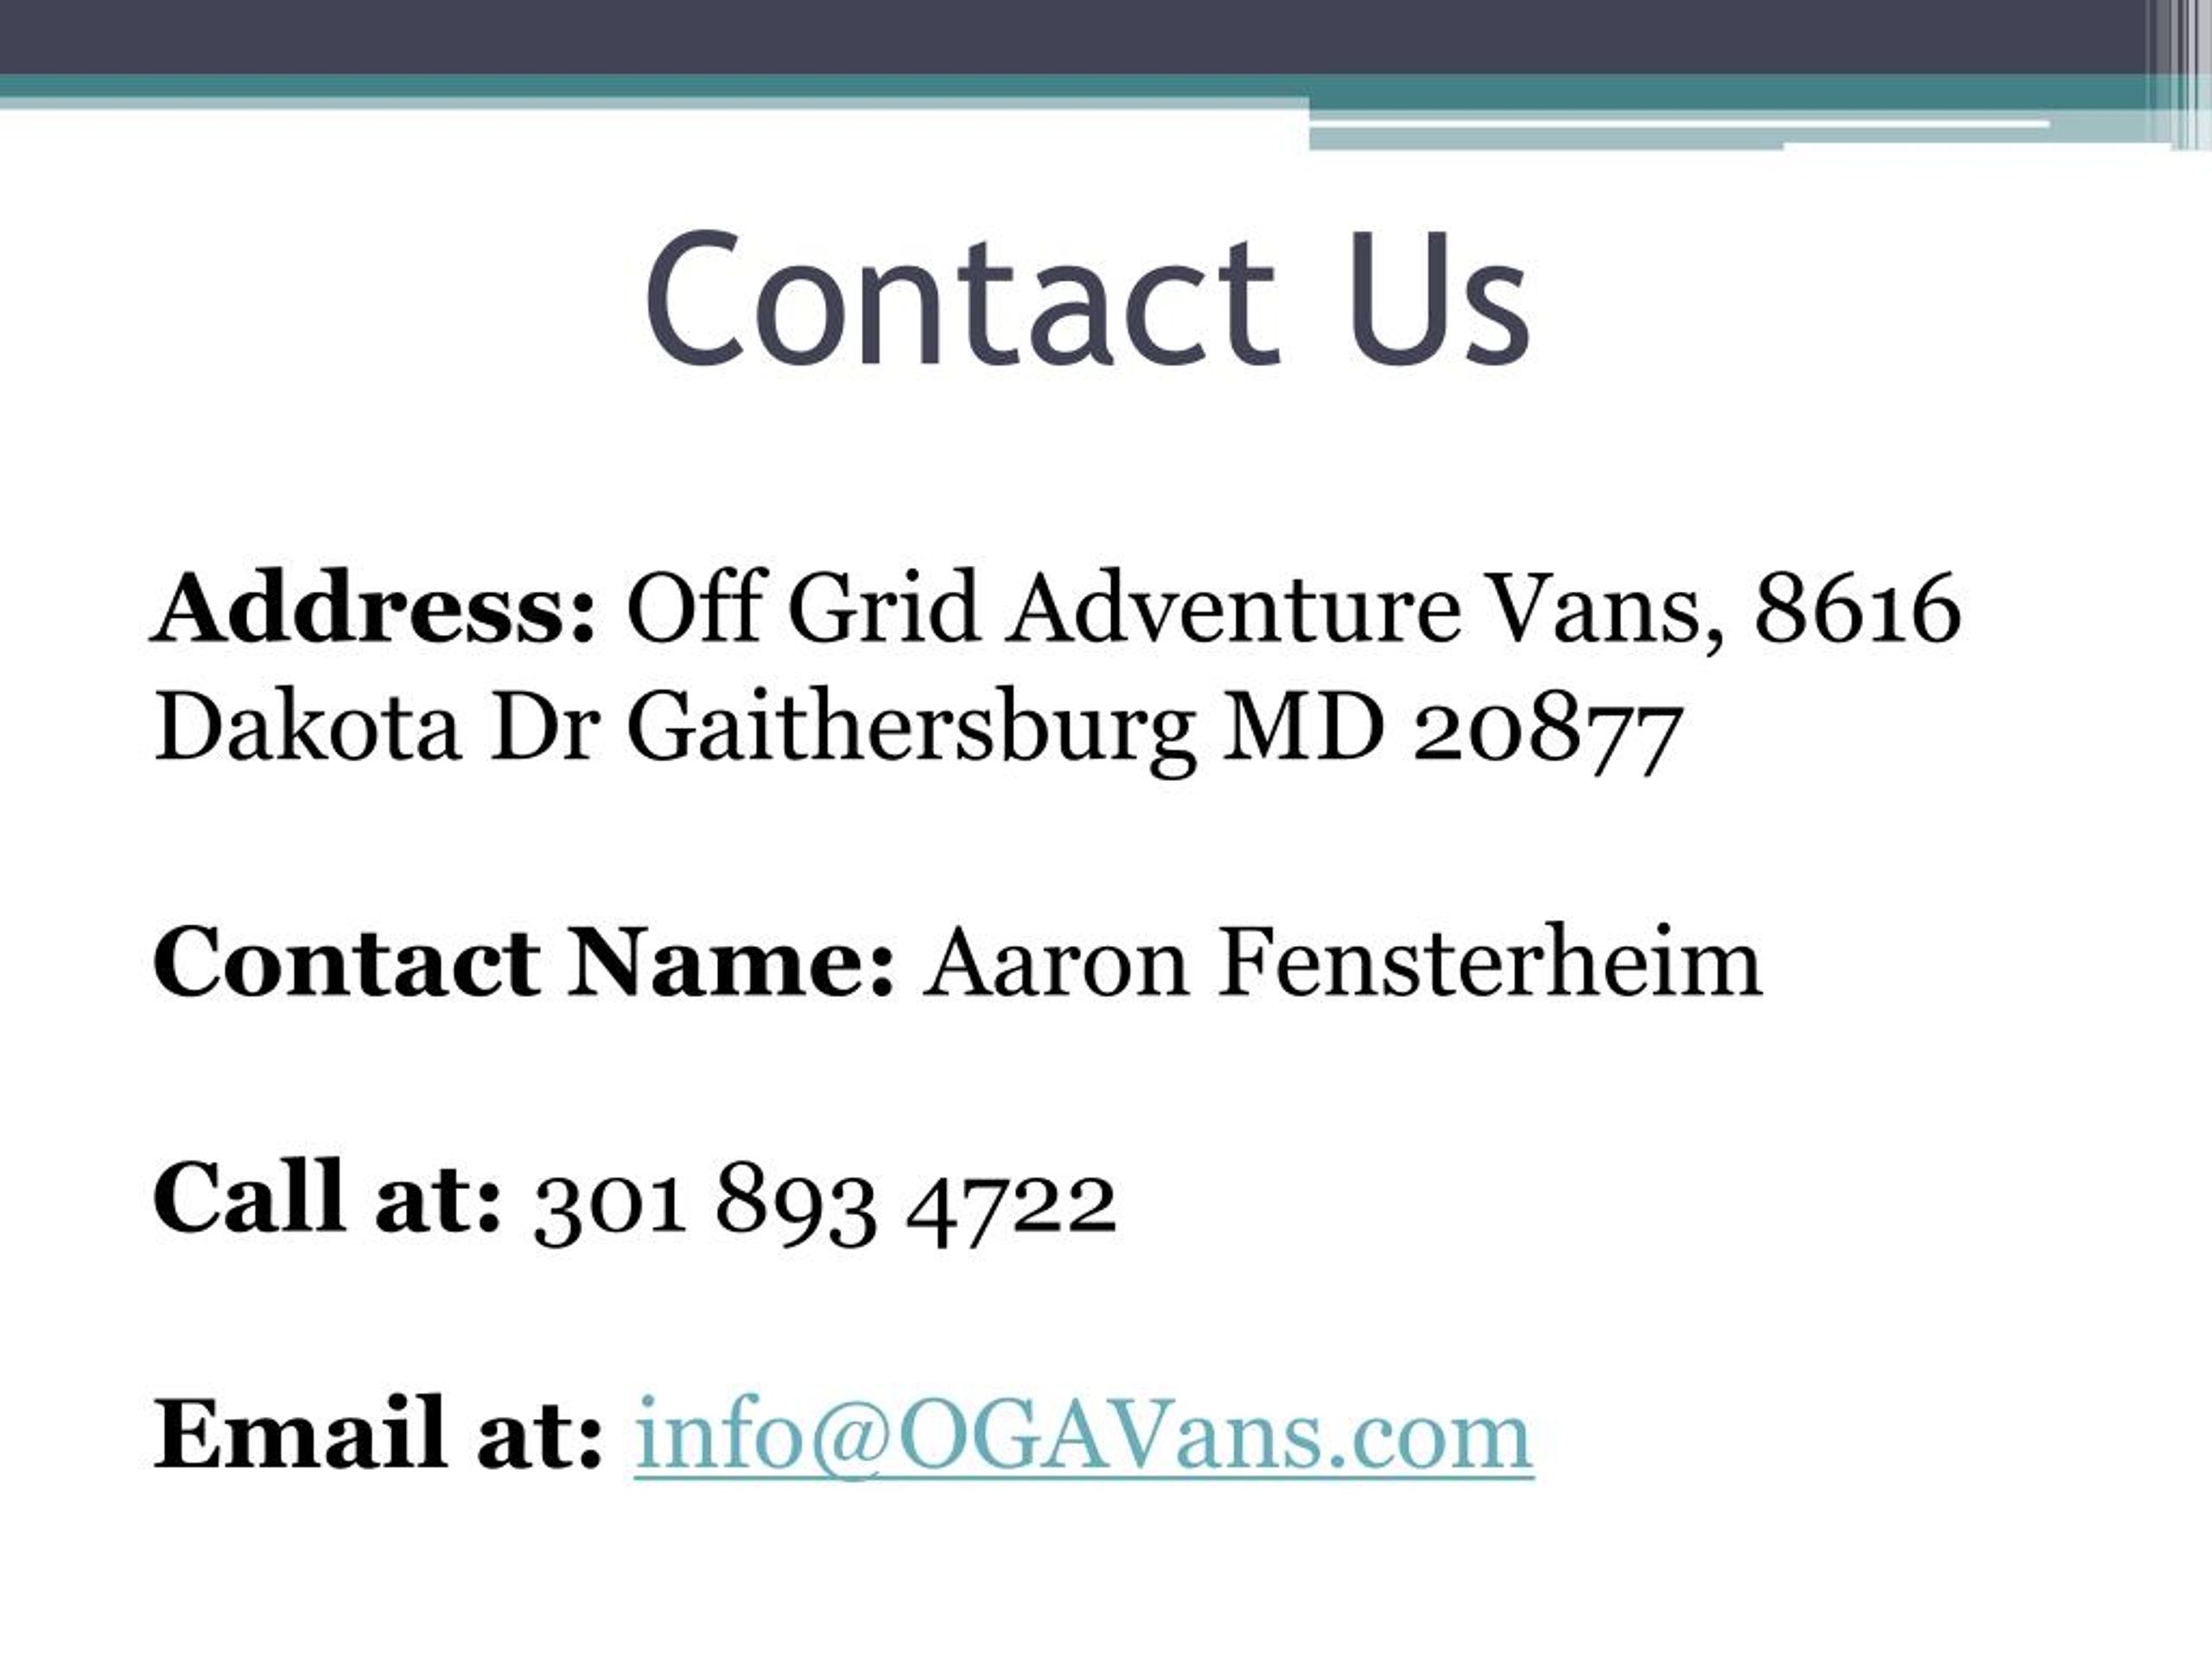 vans contact address